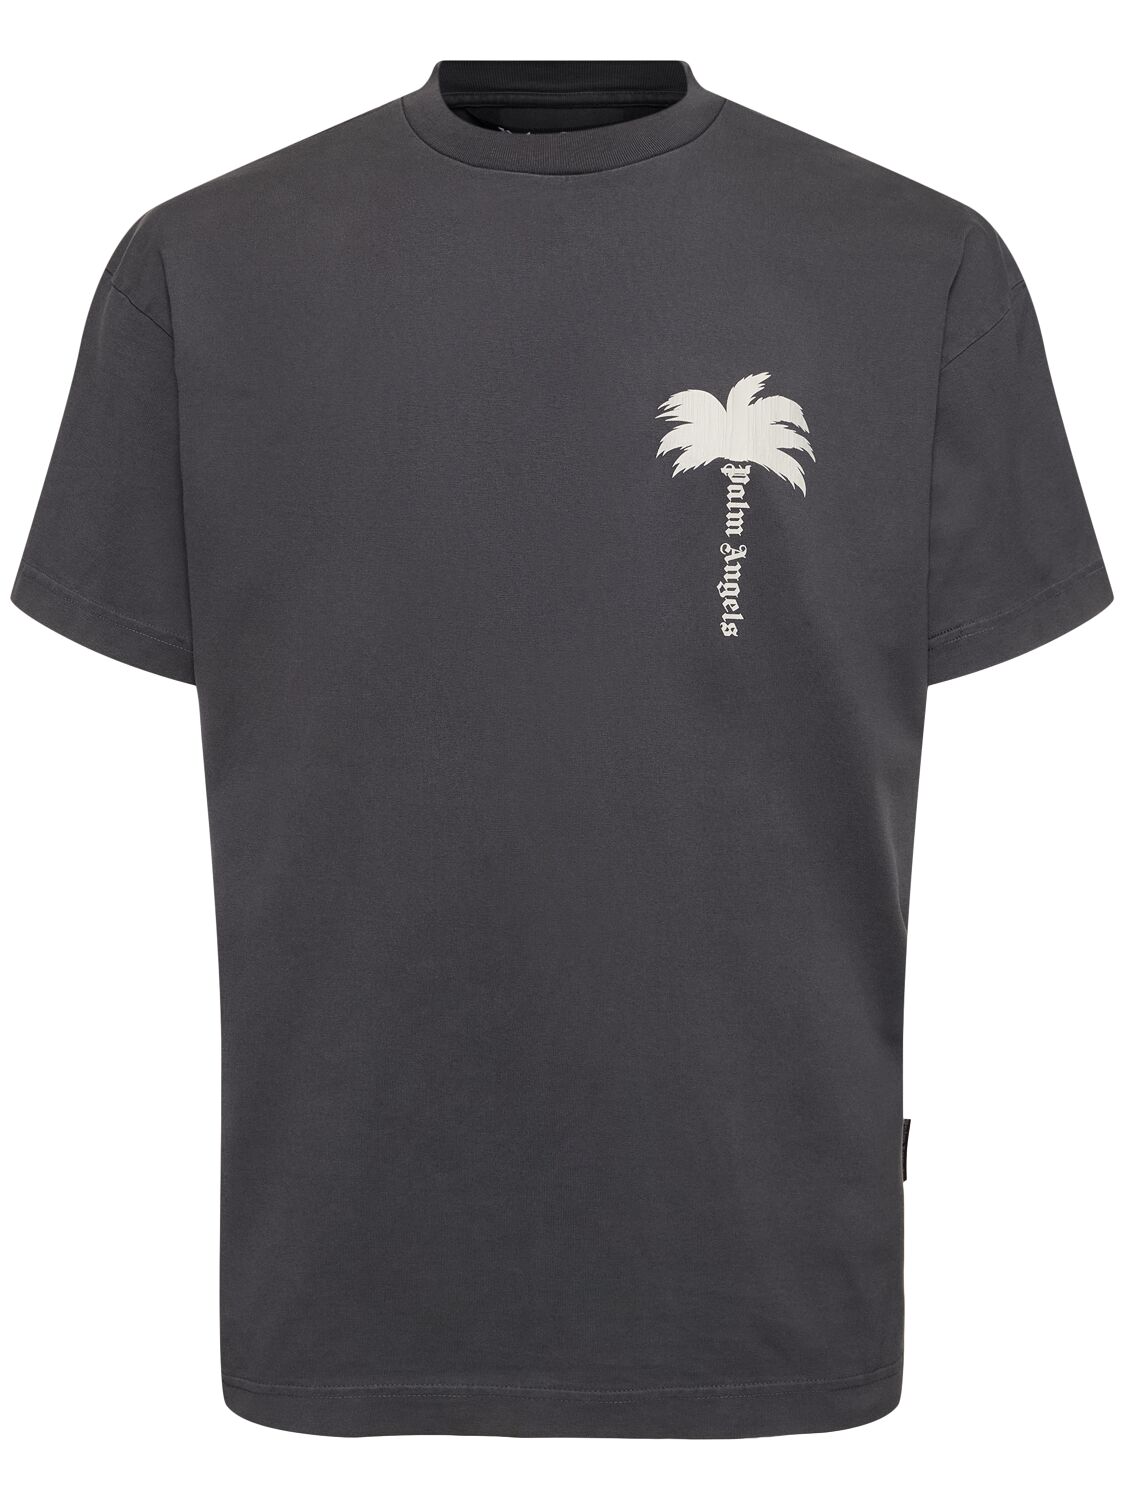 The Palm Print Cotton T-shirt